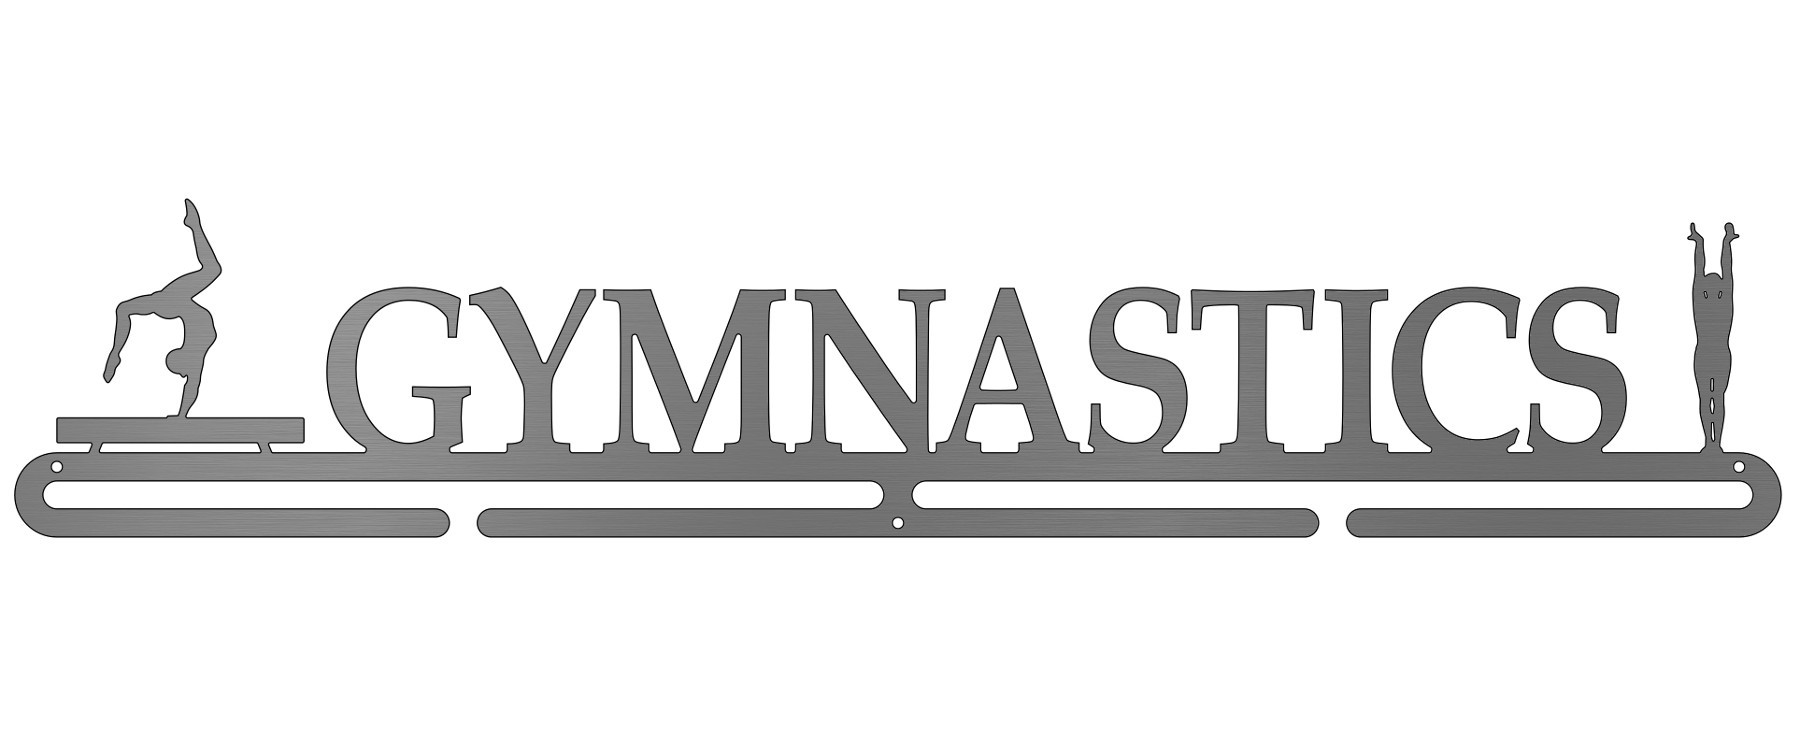 Gymnastics - Female